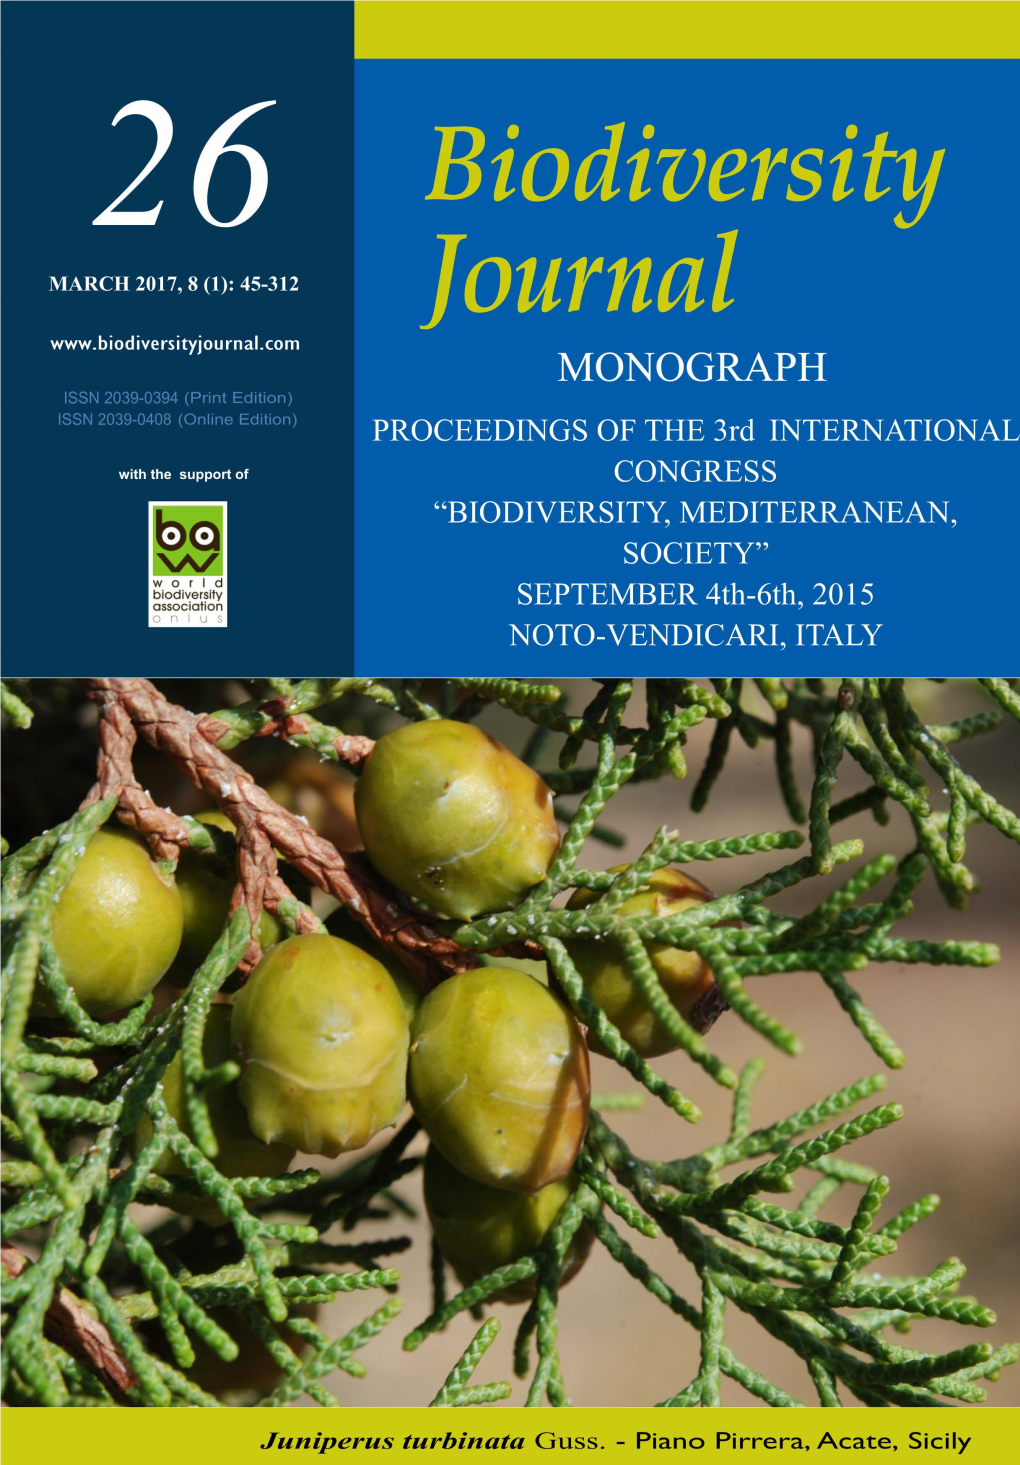 Juniperus Turbinata Guss. - Piano Pirrera, Acate, Sicily BIODIVERSITY JOURNAL 2016,8 (1):45-3 12 Quaternly Scientific Journal Edited by Edizioni Danaus, Via V